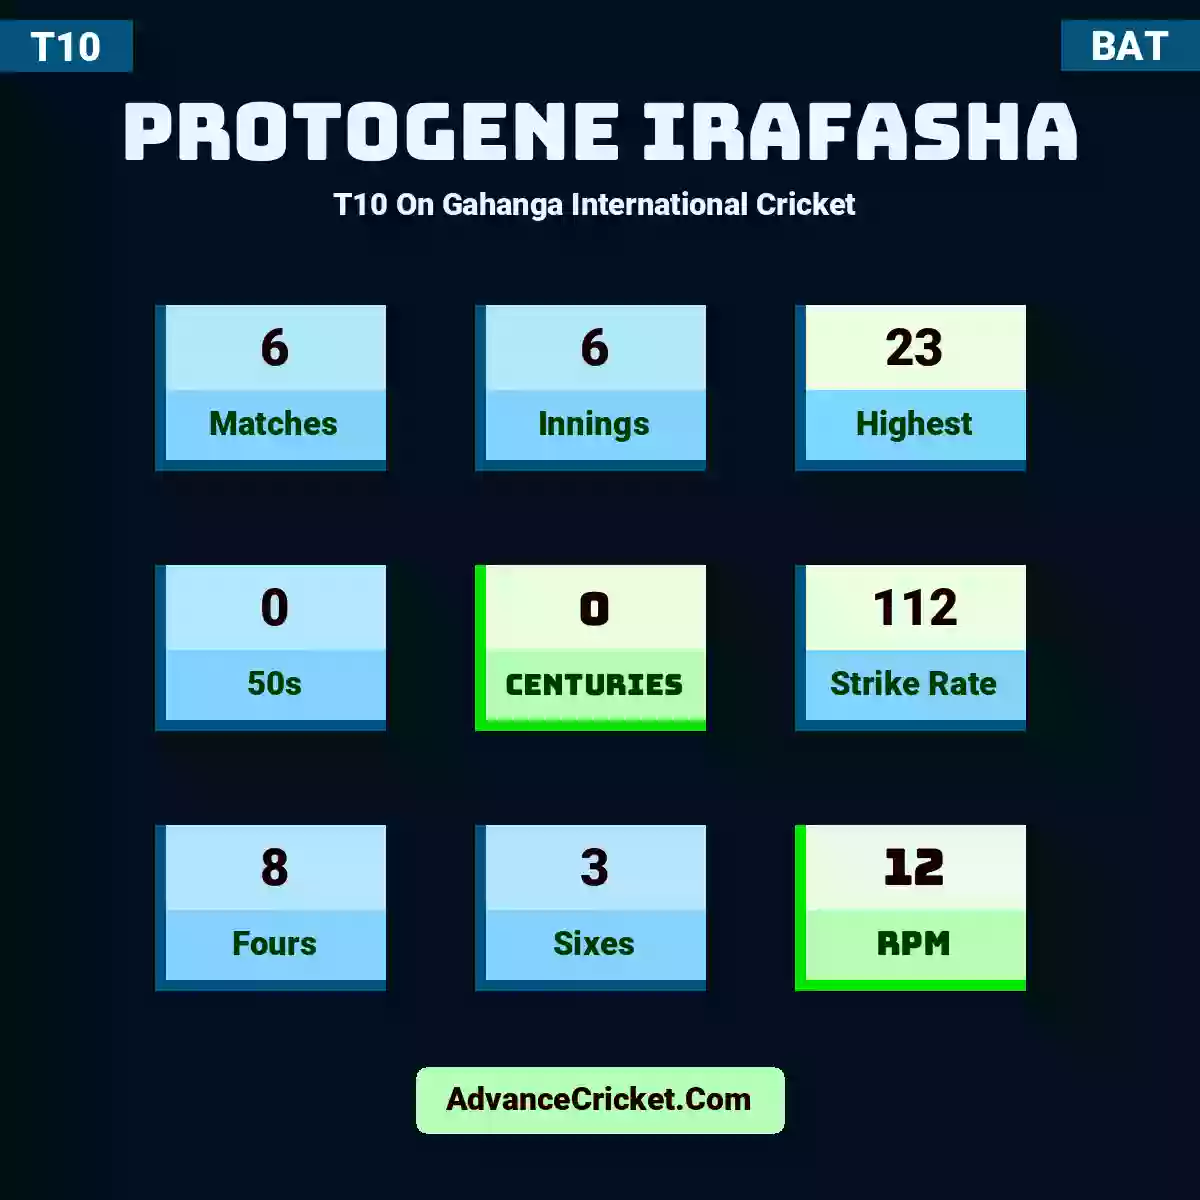 Protogene Irafasha T10  On Gahanga International Cricket , Protogene Irafasha played 6 matches, scored 23 runs as highest, 0 half-centuries, and 0 centuries, with a strike rate of 112. P.Irafasha hit 8 fours and 3 sixes, with an RPM of 12.